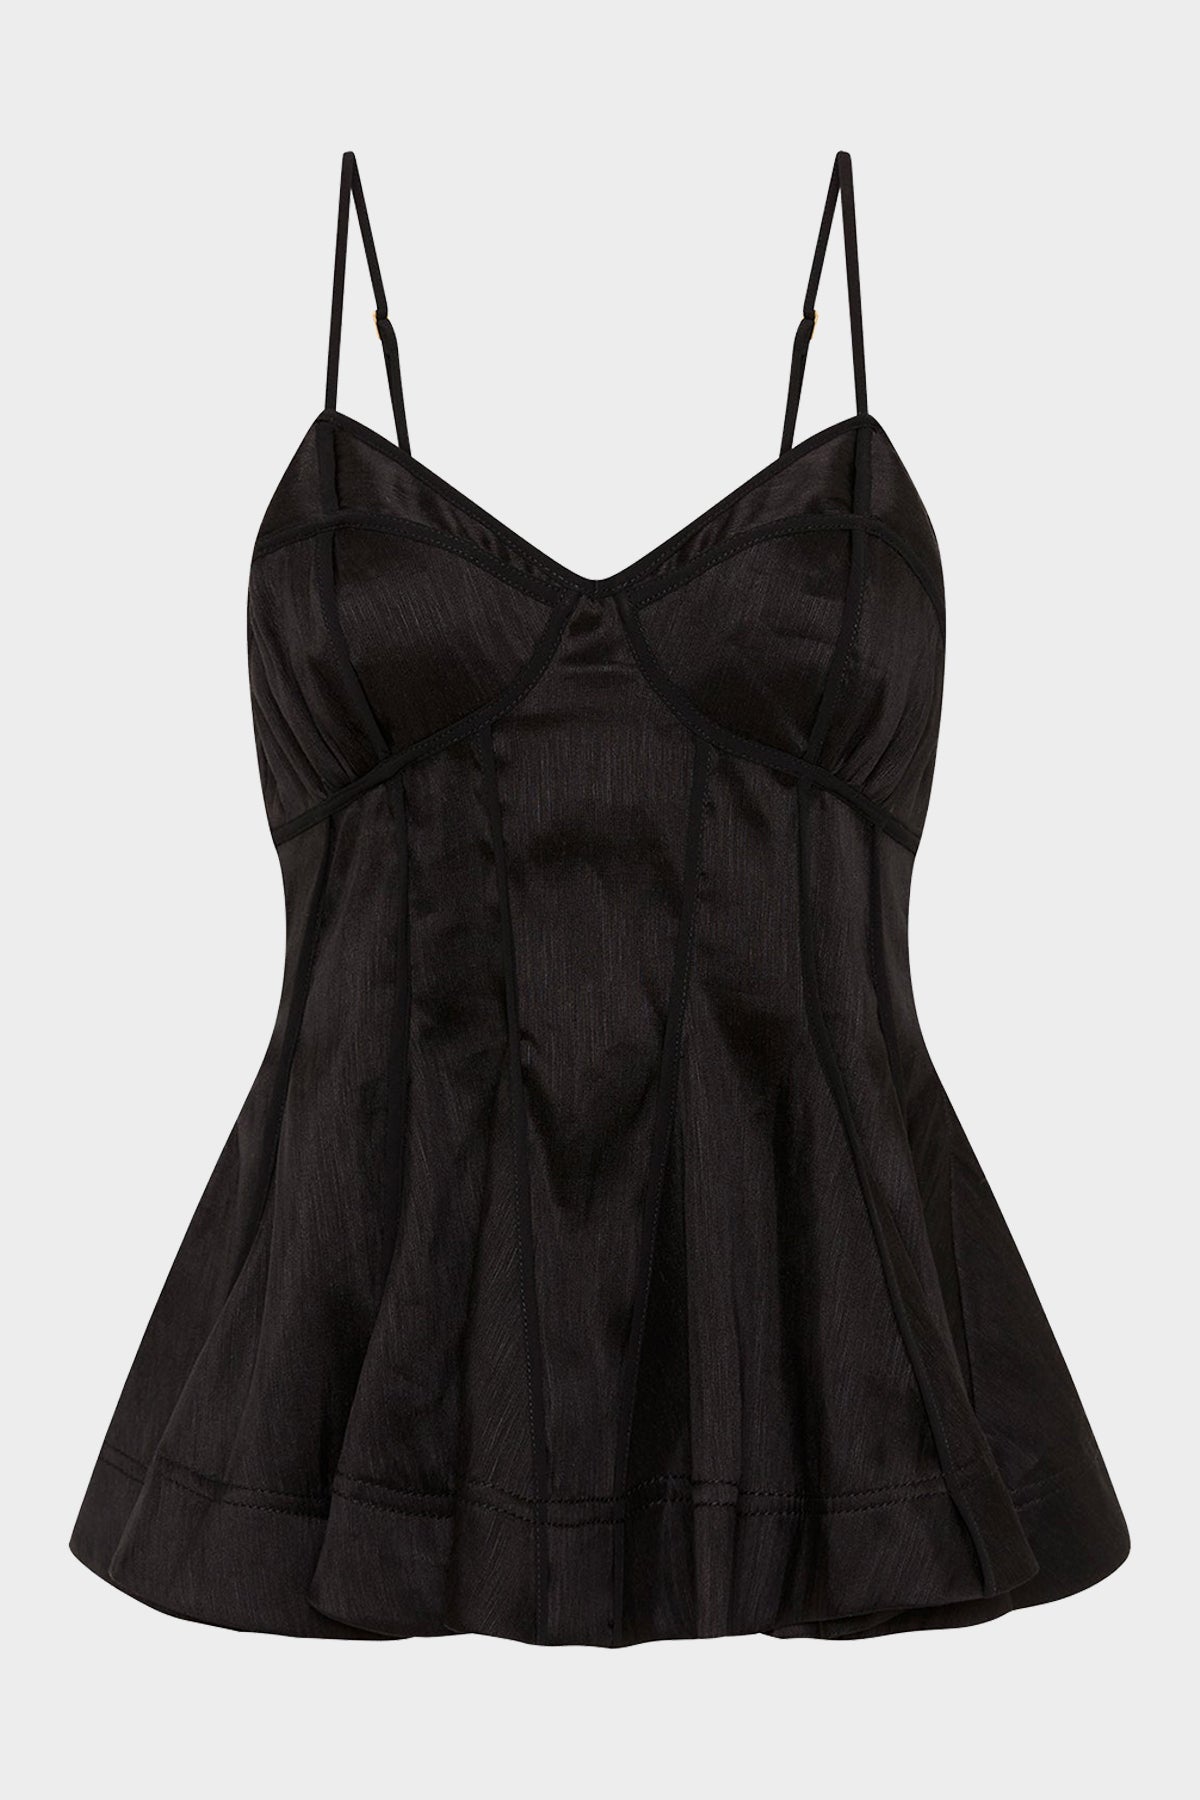 Evangeline Flared Camisole Top in Black - shop-olivia.com